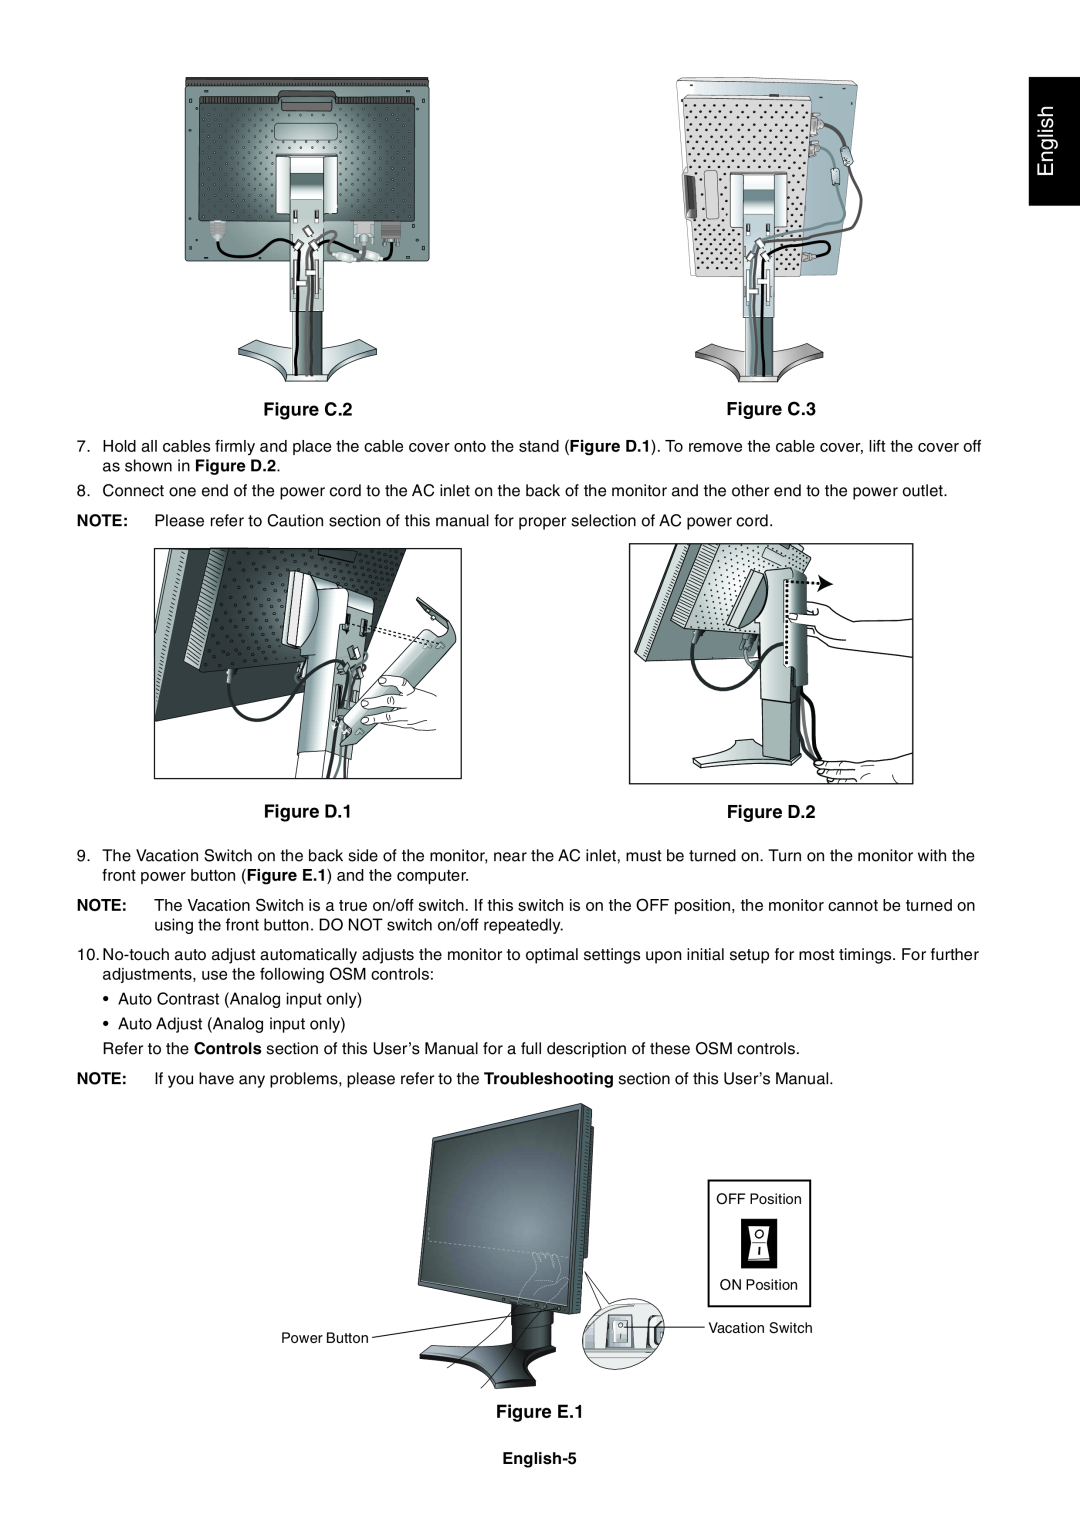 NEC LCD1990FXp user manual English, Figure C.2, Figure C.3, Figure D.1, Figure D.2, Figure E.1 